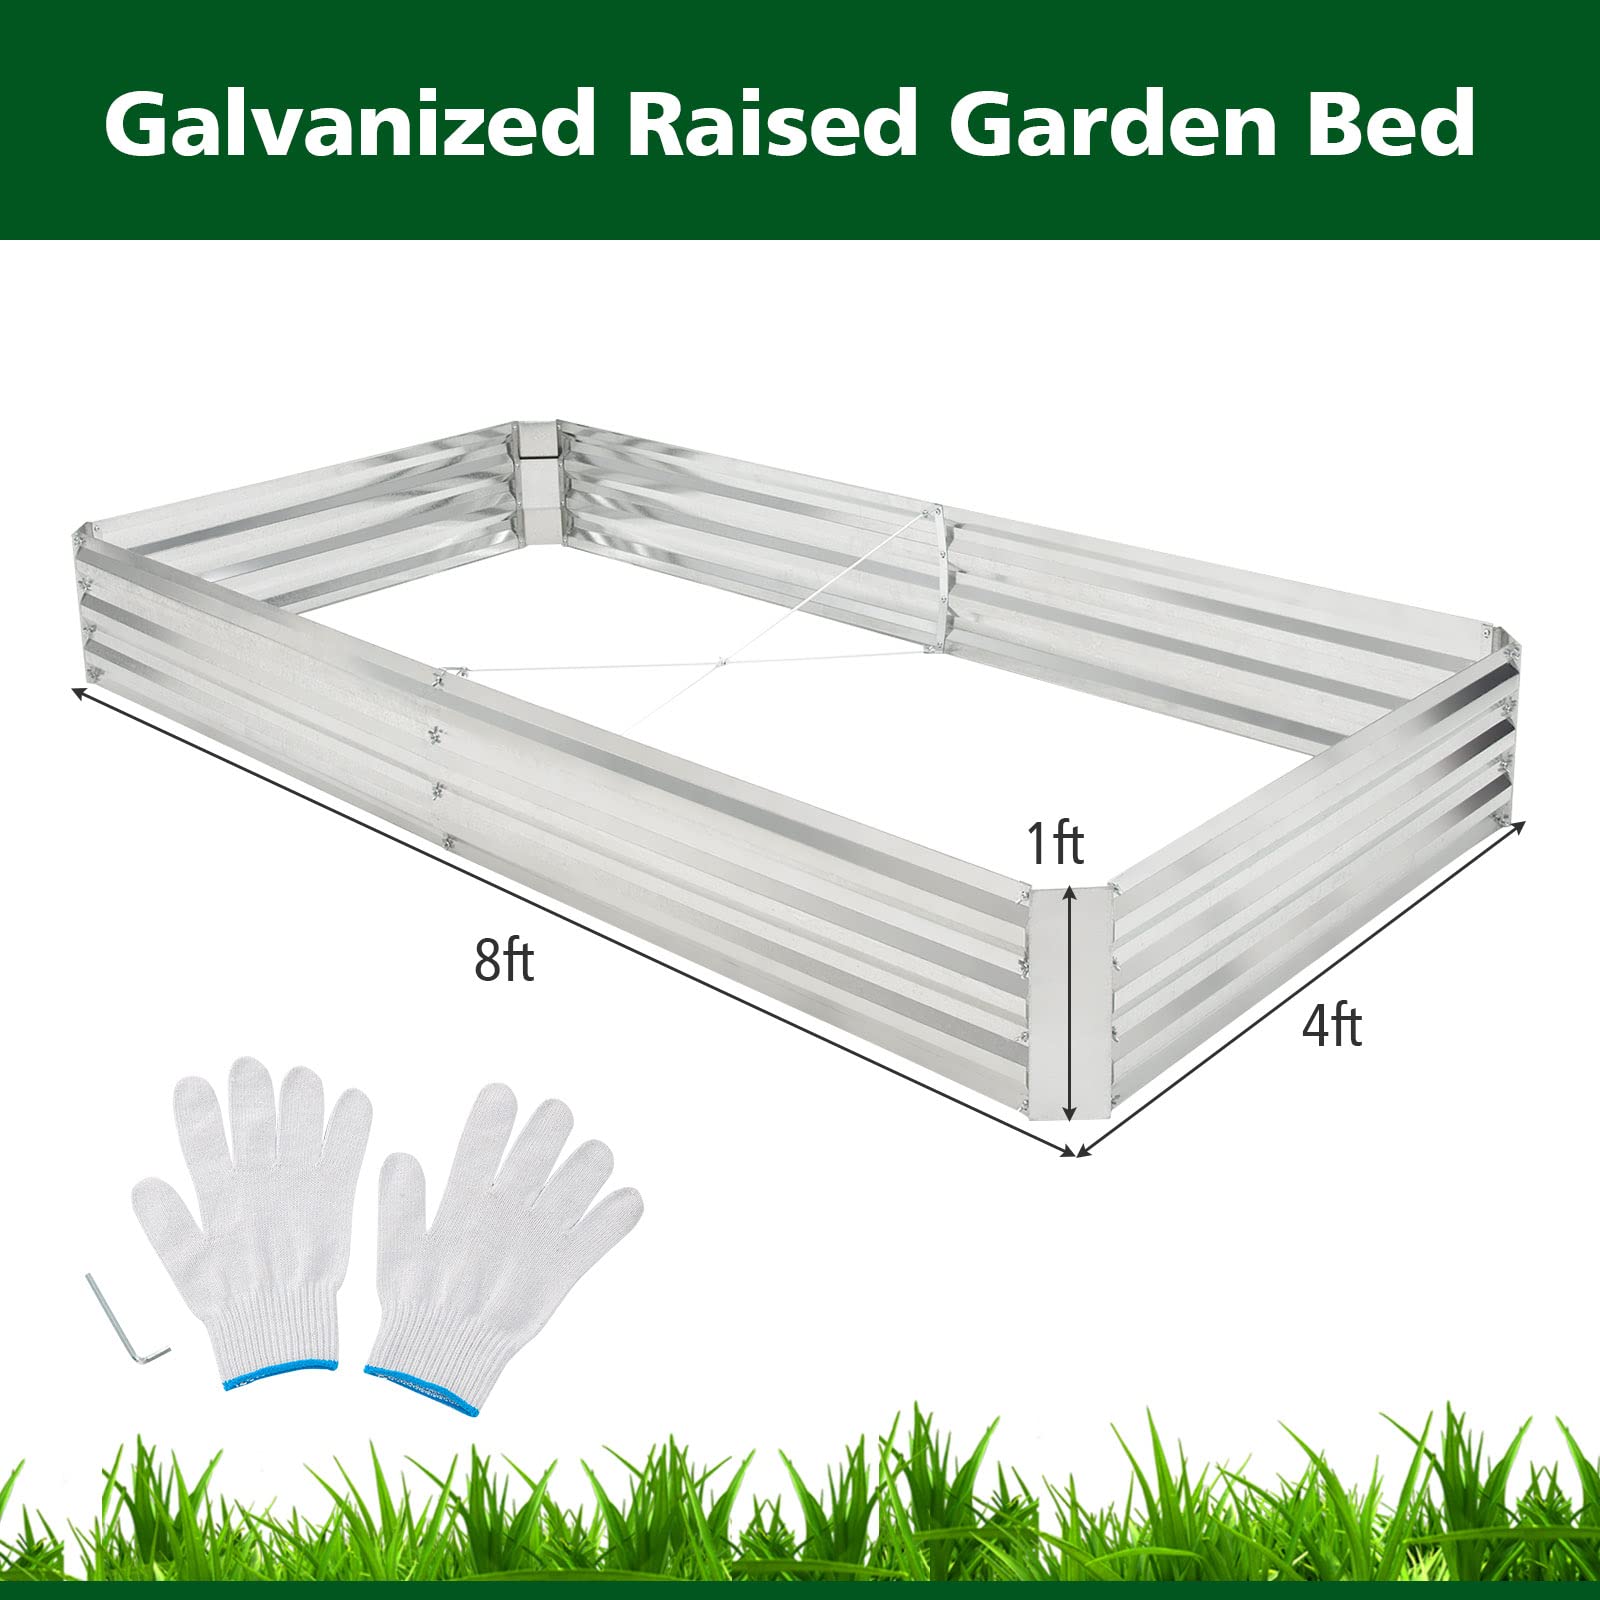 Giantex Galvanized Raised Garden Bed